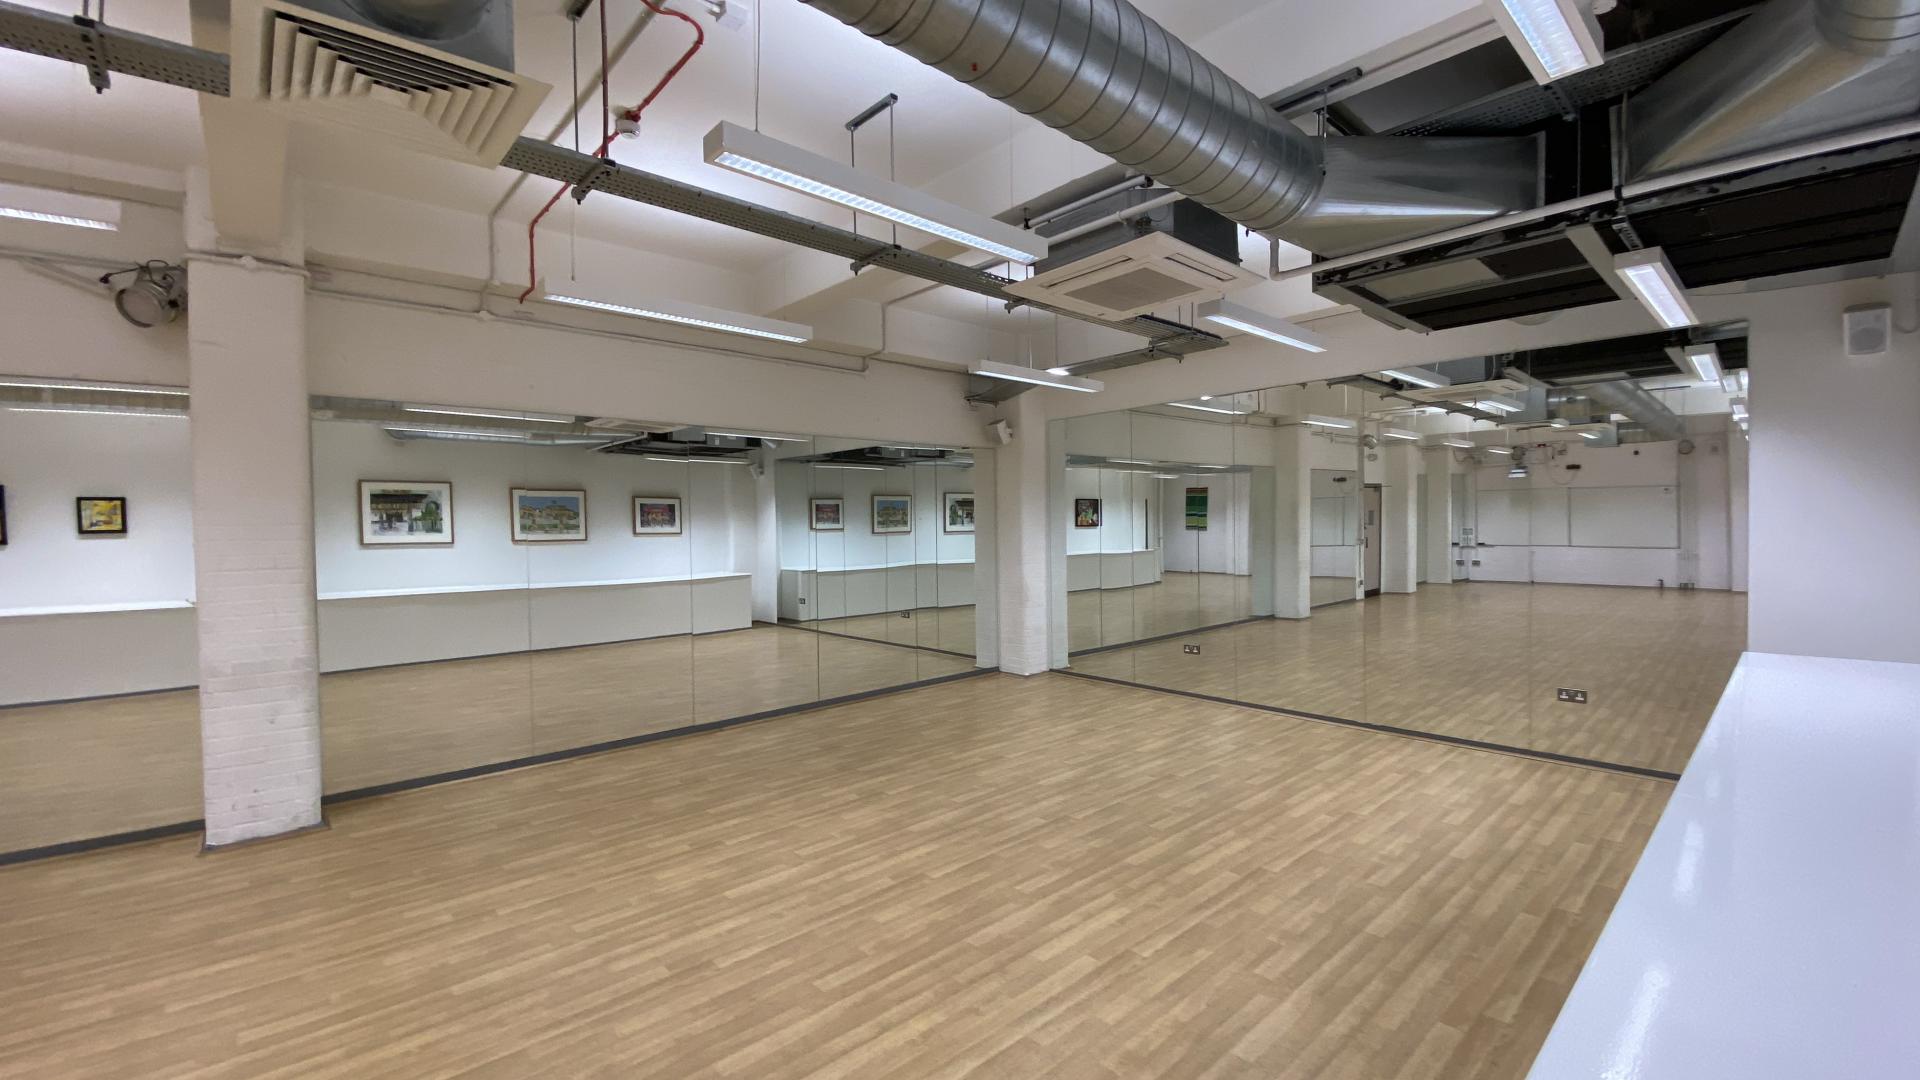 Dance Studios for Hire in Sydney